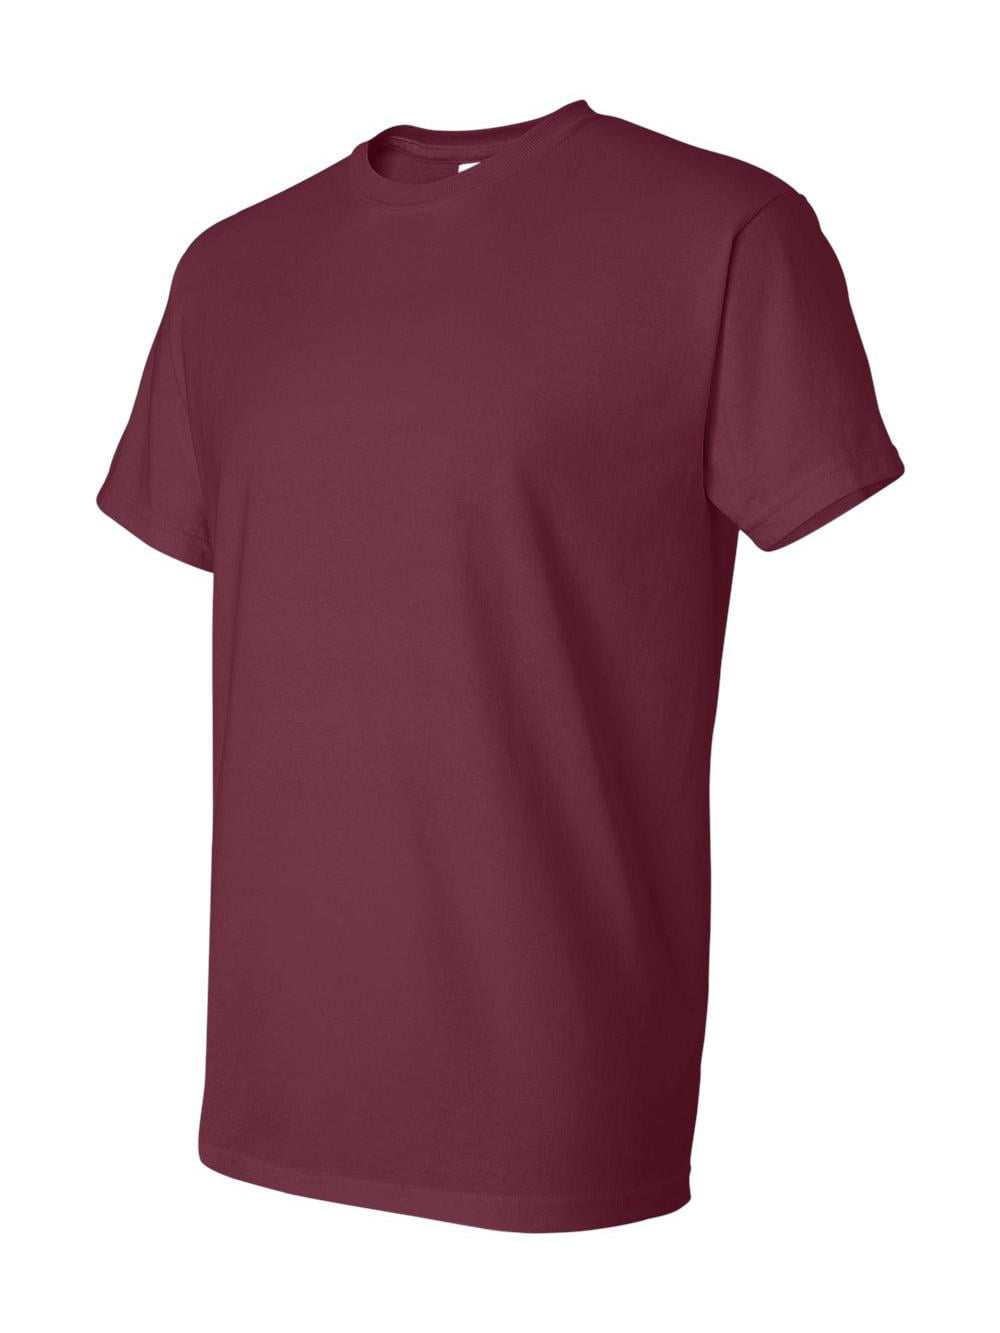 Gildan - DryBlend T-Shirt - 8000 - Maroon - Size: S - Walmart.com